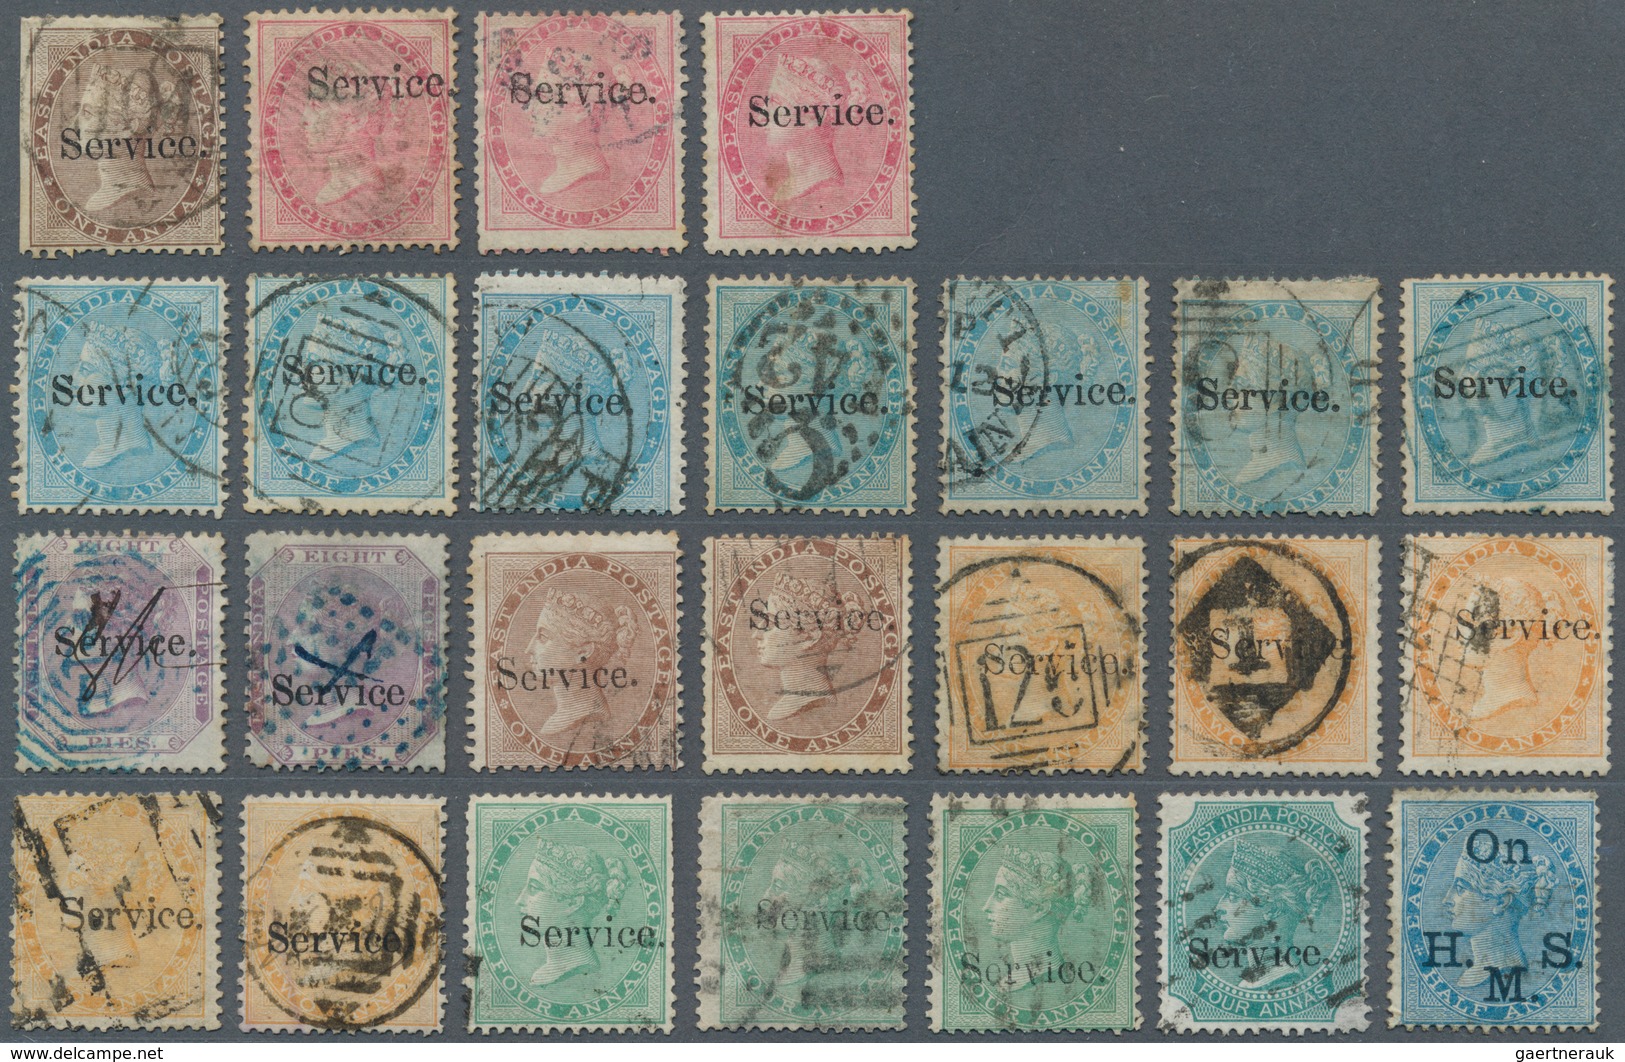 Indien - Dienstmarken: 1866-72, Group Of 24 QV Stamps With Small "Service." Overprint, Plus 1877 ½a. - Sellos De Servicio